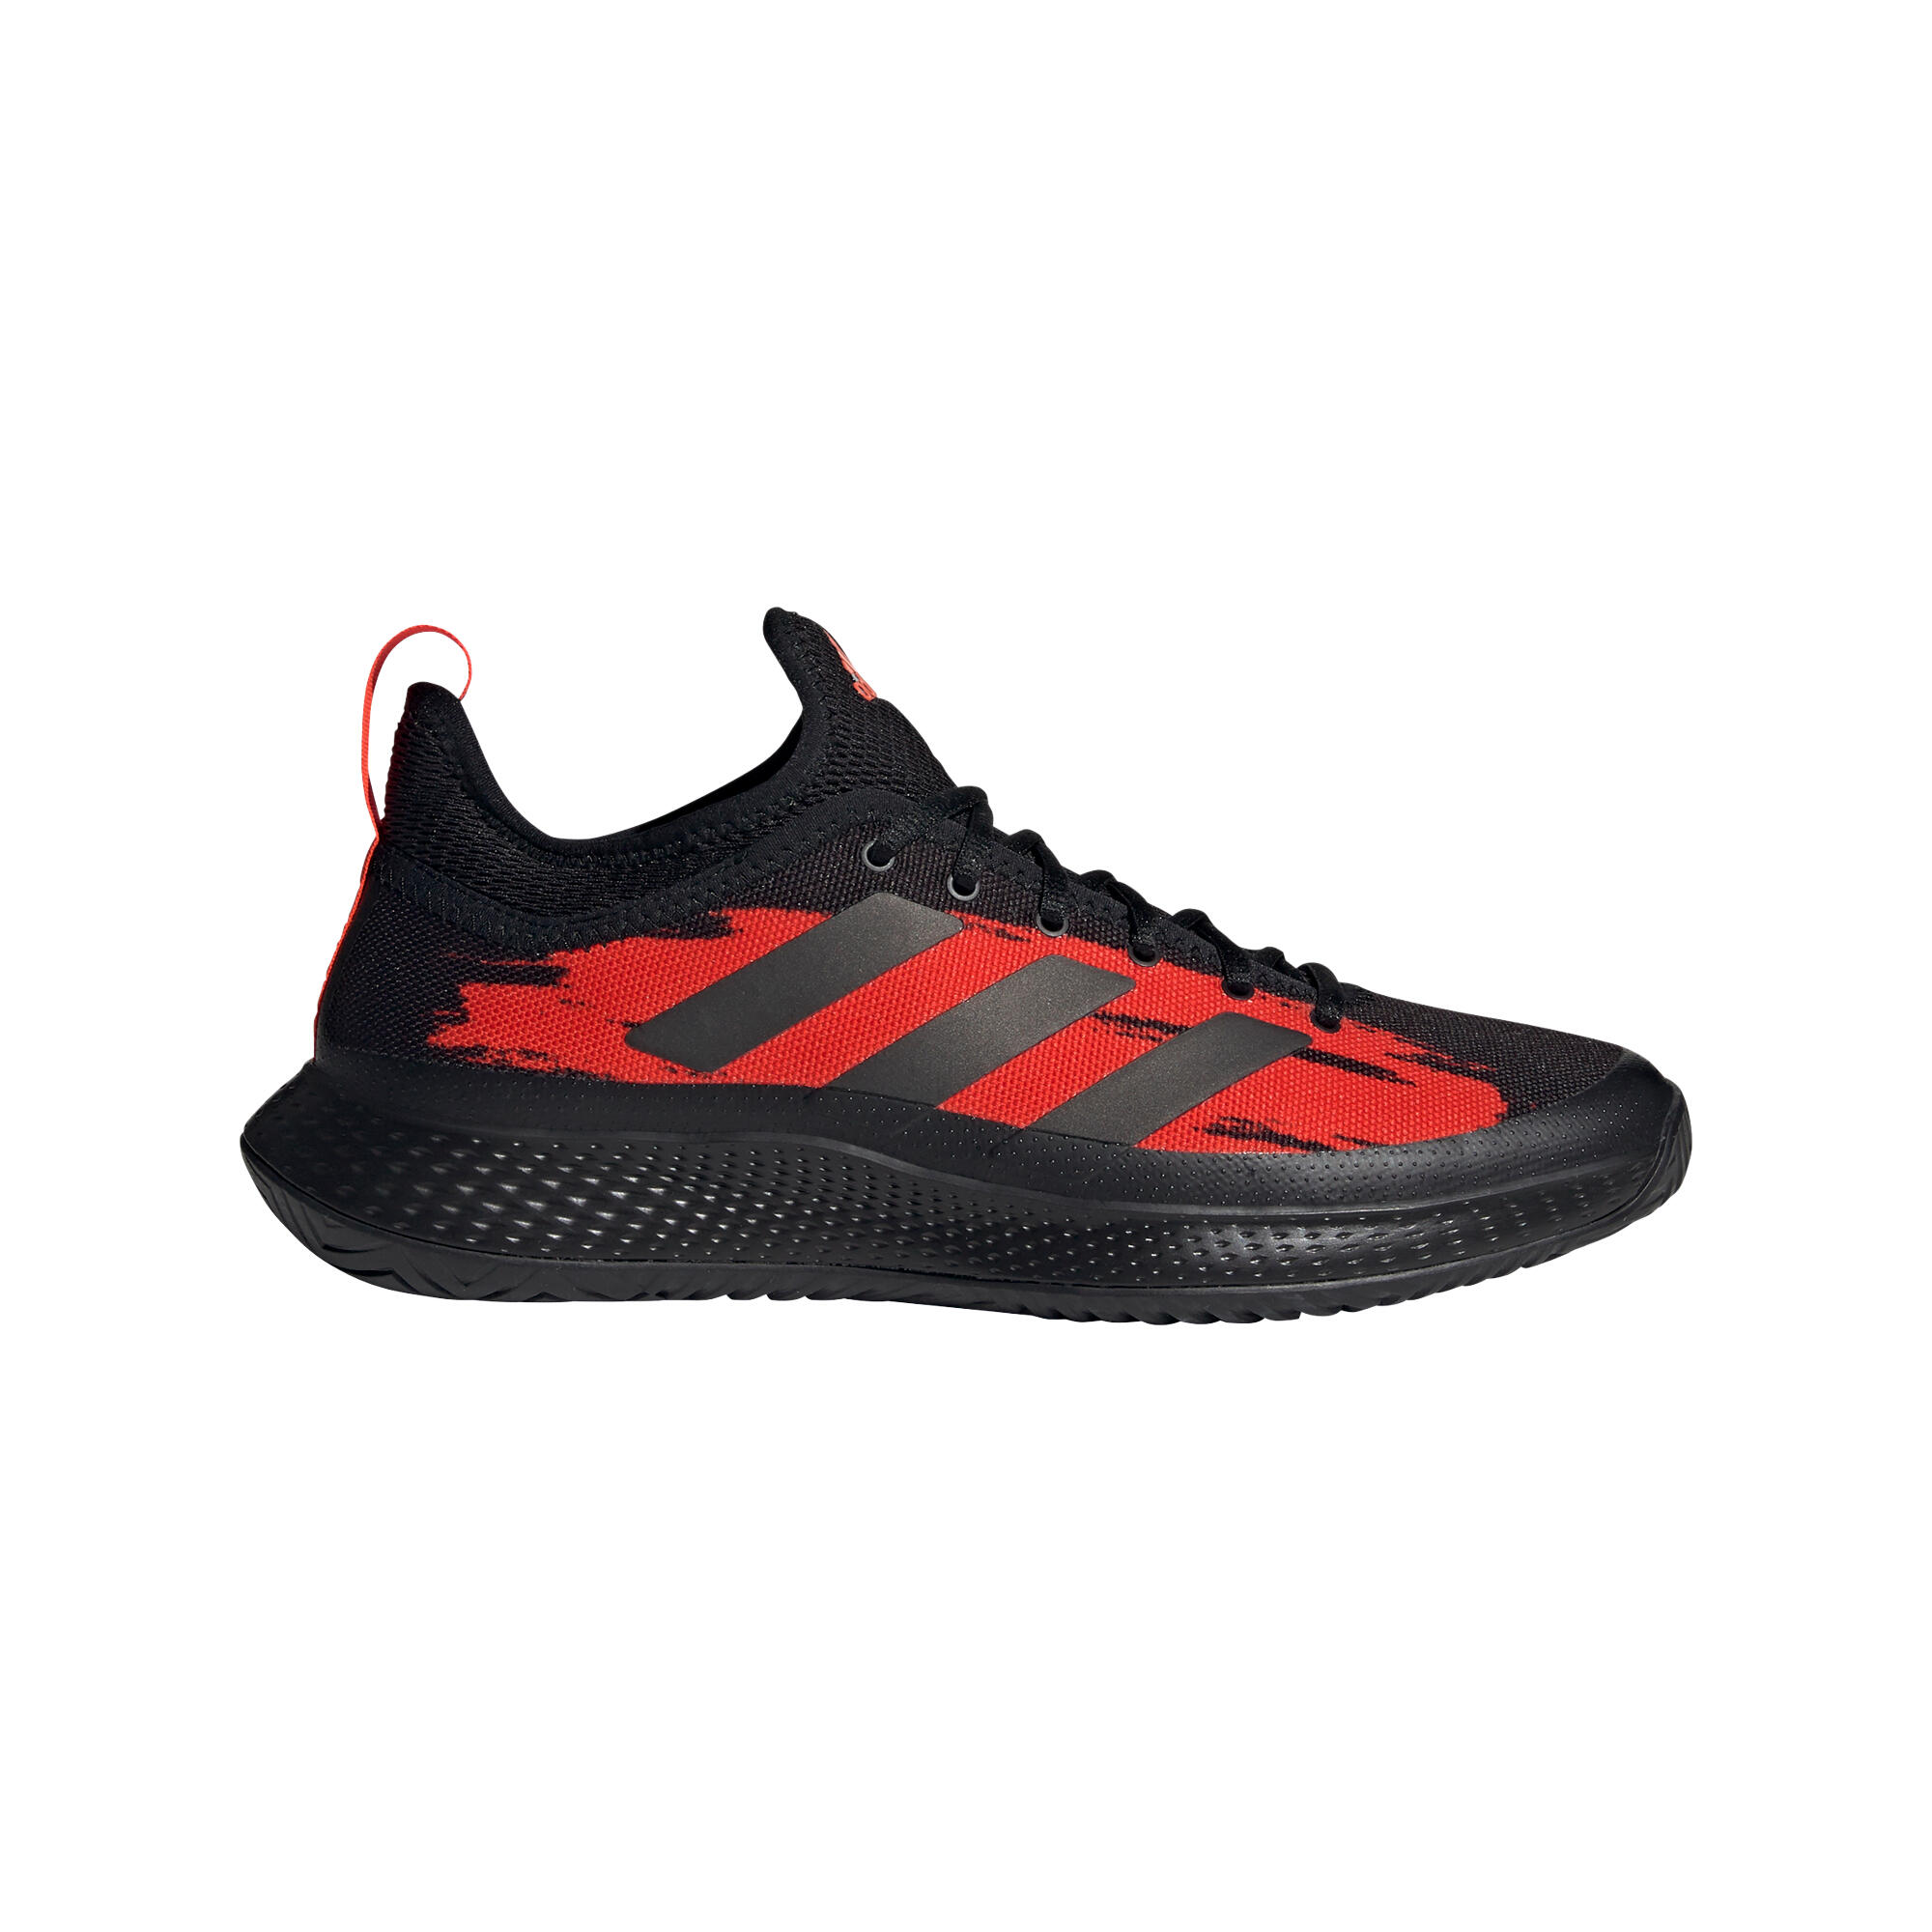 Chaussures de Tennis Adidas Homme | Decathlon